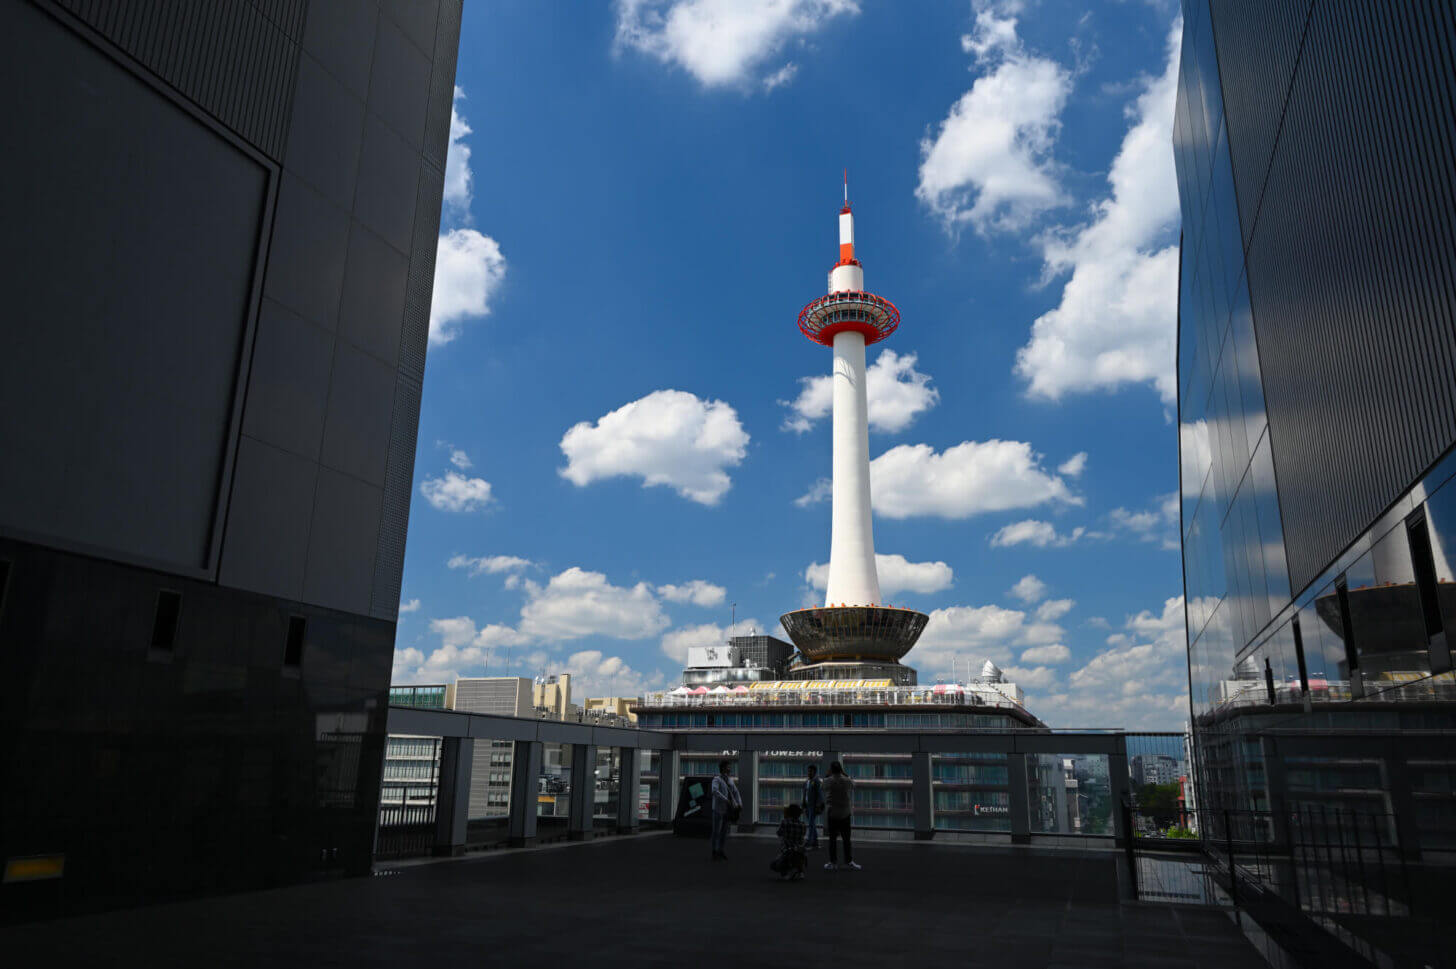 Nikon Z6IIとNIKKOR Z 24-50mm f/4-6.3で撮る京都タワー